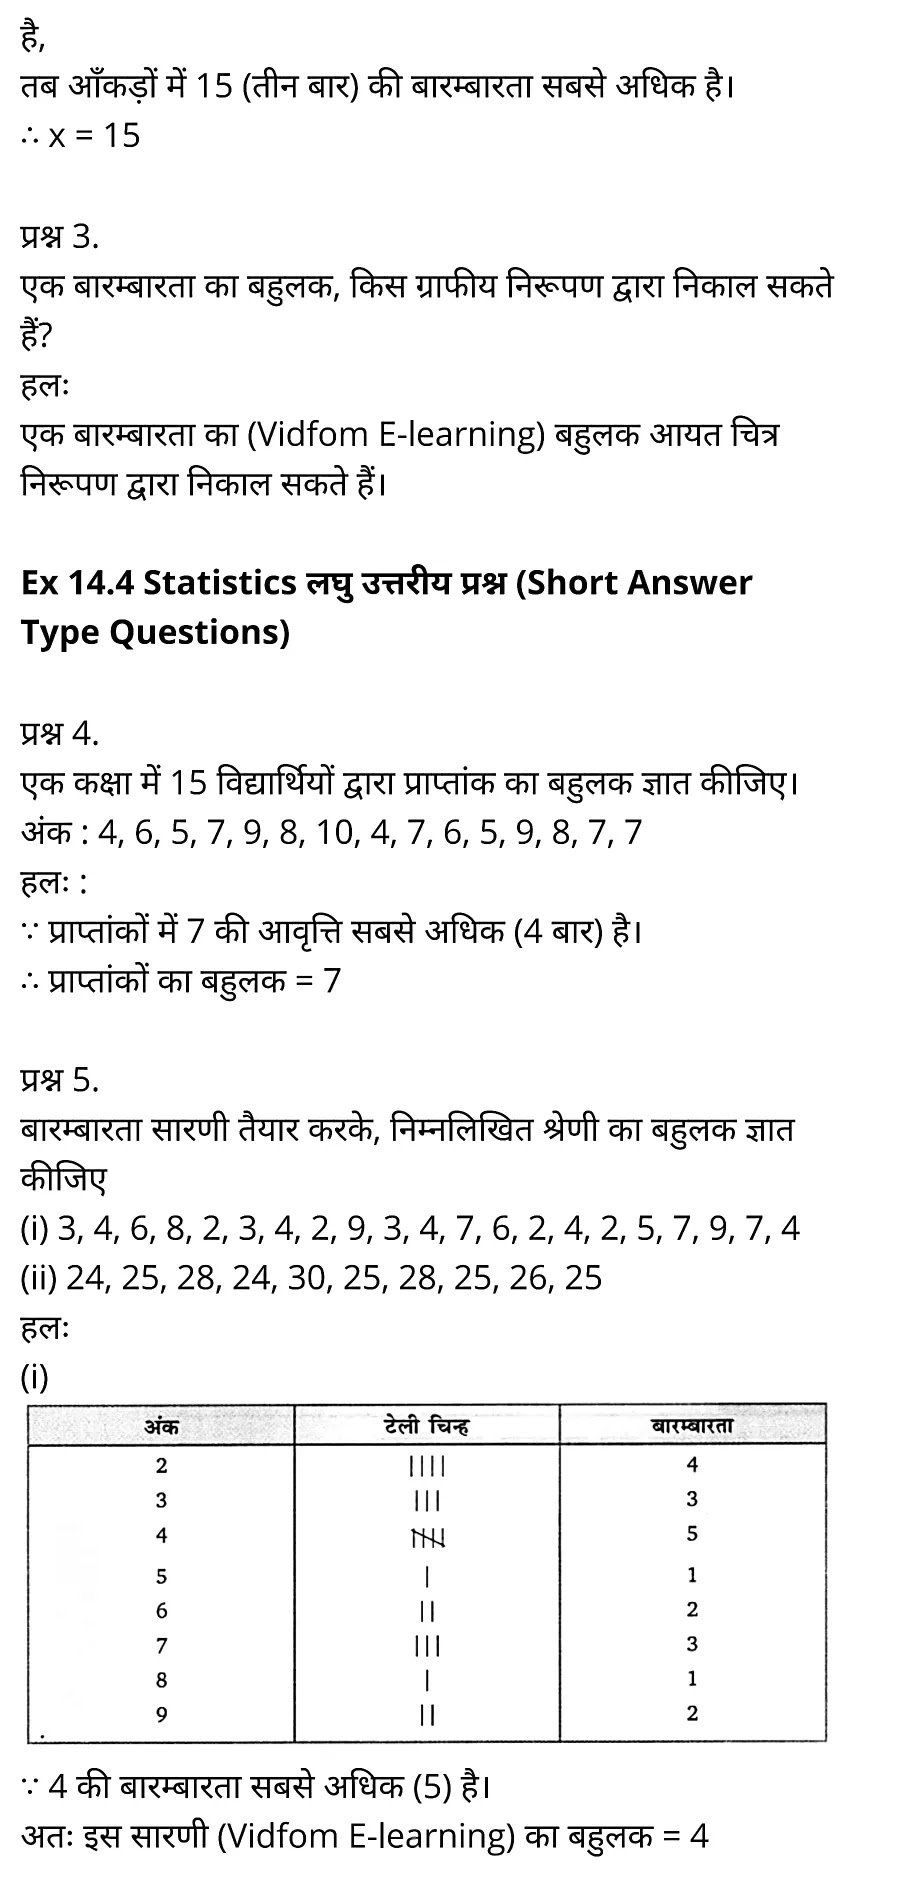 Chapter 14 Statistics Ex 14.1, Chapter 14 Statistics Ex 14.2, Chapter 14 Statistics Ex 14.3, Chapter 14 Statistics Ex 14.4, Chapter 14 Statistics Ex 14.5, Chapter 14 Statistics Ex 14.6, कक्षा 10 बालाजी गणित  के नोट्स  हिंदी में एनसीईआरटी समाधान,     class 10 Balaji Maths Chapter 14,   class 10 Balaji Maths Chapter 14 ncert solutions in Hindi,   class 10 Balaji Maths Chapter 14 notes in hindi,   class 10 Balaji Maths Chapter 14 question answer,   class 10 Balaji Maths Chapter 14 notes,   class 10 Balaji Maths Chapter 14 class 10 Balaji Maths Chapter 14 in  hindi,    class 10 Balaji Maths Chapter 14 important questions in  hindi,   class 10 Balaji Maths Chapter 14 notes in hindi,    class 10 Balaji Maths Chapter 14 test,   class 10 Balaji Maths Chapter 14 pdf,   class 10 Balaji Maths Chapter 14 notes pdf,   class 10 Balaji Maths Chapter 14 exercise solutions,   class 10 Balaji Maths Chapter 14 notes study rankers,   class 10 Balaji Maths Chapter 14 notes,    class 10 Balaji Maths Chapter 14  class 10  notes pdf,   class 10 Balaji Maths Chapter 14 class 10  notes  ncert,   class 10 Balaji Maths Chapter 14 class 10 pdf,   class 10 Balaji Maths Chapter 14  book,   class 10 Balaji Maths Chapter 14 quiz class 10  ,    10  th class 10 Balaji Maths Chapter 14  book up board,   up board 10  th class 10 Balaji Maths Chapter 14 notes,  class 10 Balaji Maths,   class 10 Balaji Maths ncert solutions in Hindi,   class 10 Balaji Maths notes in hindi,   class 10 Balaji Maths question answer,   class 10 Balaji Maths notes,  class 10 Balaji Maths class 10 Balaji Maths Chapter 14 in  hindi,    class 10 Balaji Maths important questions in  hindi,   class 10 Balaji Maths notes in hindi,    class 10 Balaji Maths test,  class 10 Balaji Maths class 10 Balaji Maths Chapter 14 pdf,   class 10 Balaji Maths notes pdf,   class 10 Balaji Maths exercise solutions,   class 10 Balaji Maths,  class 10 Balaji Maths notes study rankers,   class 10 Balaji Maths notes,  class 10 Balaji Maths notes,   class 10 Balaji Maths  class 10  notes pdf,   class 10 Balaji Maths class 10  notes  ncert,   class 10 Balaji Maths class 10 pdf,   class 10 Balaji Maths  book,  class 10 Balaji Maths quiz class 10  ,  10  th class 10 Balaji Maths    book up board,    up board 10  th class 10 Balaji Maths notes,      कक्षा 10 बालाजी गणित अध्याय 14 ,  कक्षा 10 बालाजी गणित, कक्षा 10 बालाजी गणित अध्याय 14  के नोट्स हिंदी में,  कक्षा 10 का हिंदी अध्याय 14 का प्रश्न उत्तर,  कक्षा 10 बालाजी गणित अध्याय 14  के नोट्स,  10 कक्षा बालाजी गणित  हिंदी में, कक्षा 10 बालाजी गणित अध्याय 14  हिंदी में,  कक्षा 10 बालाजी गणित अध्याय 14  महत्वपूर्ण प्रश्न हिंदी में, कक्षा 10   हिंदी के नोट्स  हिंदी में, बालाजी गणित हिंदी में  कक्षा 10 नोट्स pdf,    बालाजी गणित हिंदी में  कक्षा 10 नोट्स 2021 ncert,   बालाजी गणित हिंदी  कक्षा 10 pdf,   बालाजी गणित हिंदी में  पुस्तक,   बालाजी गणित हिंदी में की बुक,   बालाजी गणित हिंदी में  प्रश्नोत्तरी class 10 ,  बिहार बोर्ड 10  पुस्तक वीं हिंदी नोट्स,    बालाजी गणित कक्षा 10 नोट्स 2021 ncert,   बालाजी गणित  कक्षा 10 pdf,   बालाजी गणित  पुस्तक,   बालाजी गणित  प्रश्नोत्तरी class 10, कक्षा 10 बालाजी गणित,  कक्षा 10 बालाजी गणित  के नोट्स हिंदी में,  कक्षा 10 का हिंदी का प्रश्न उत्तर,  कक्षा 10 बालाजी गणित  के नोट्स,  10 कक्षा हिंदी 2021  हिंदी में, कक्षा 10 बालाजी गणित  हिंदी में,  कक्षा 10 बालाजी गणित  महत्वपूर्ण प्रश्न हिंदी में, कक्षा 10 बालाजी गणित  नोट्स  हिंदी में,